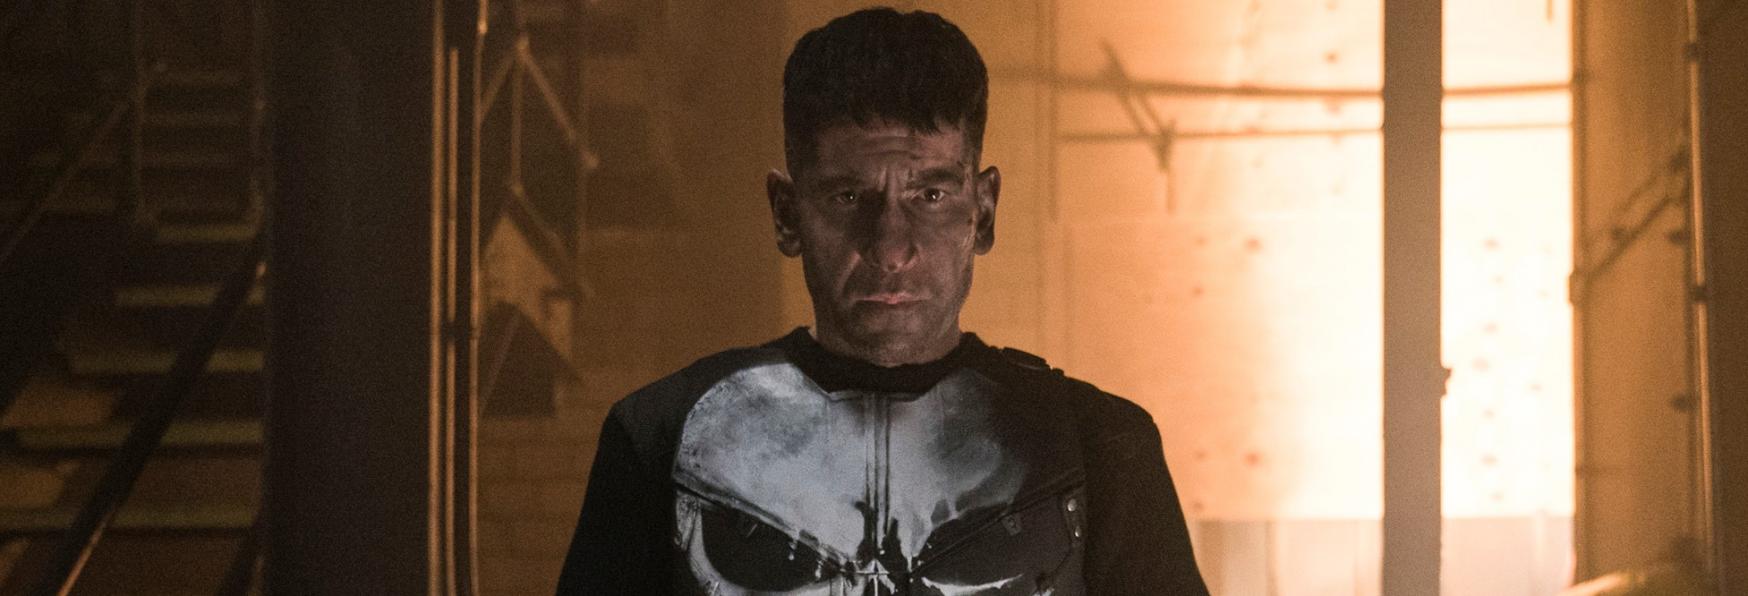 Daredevil: Born Again - Jon Bernthal tornerà come The Punisher nella Serie TV 